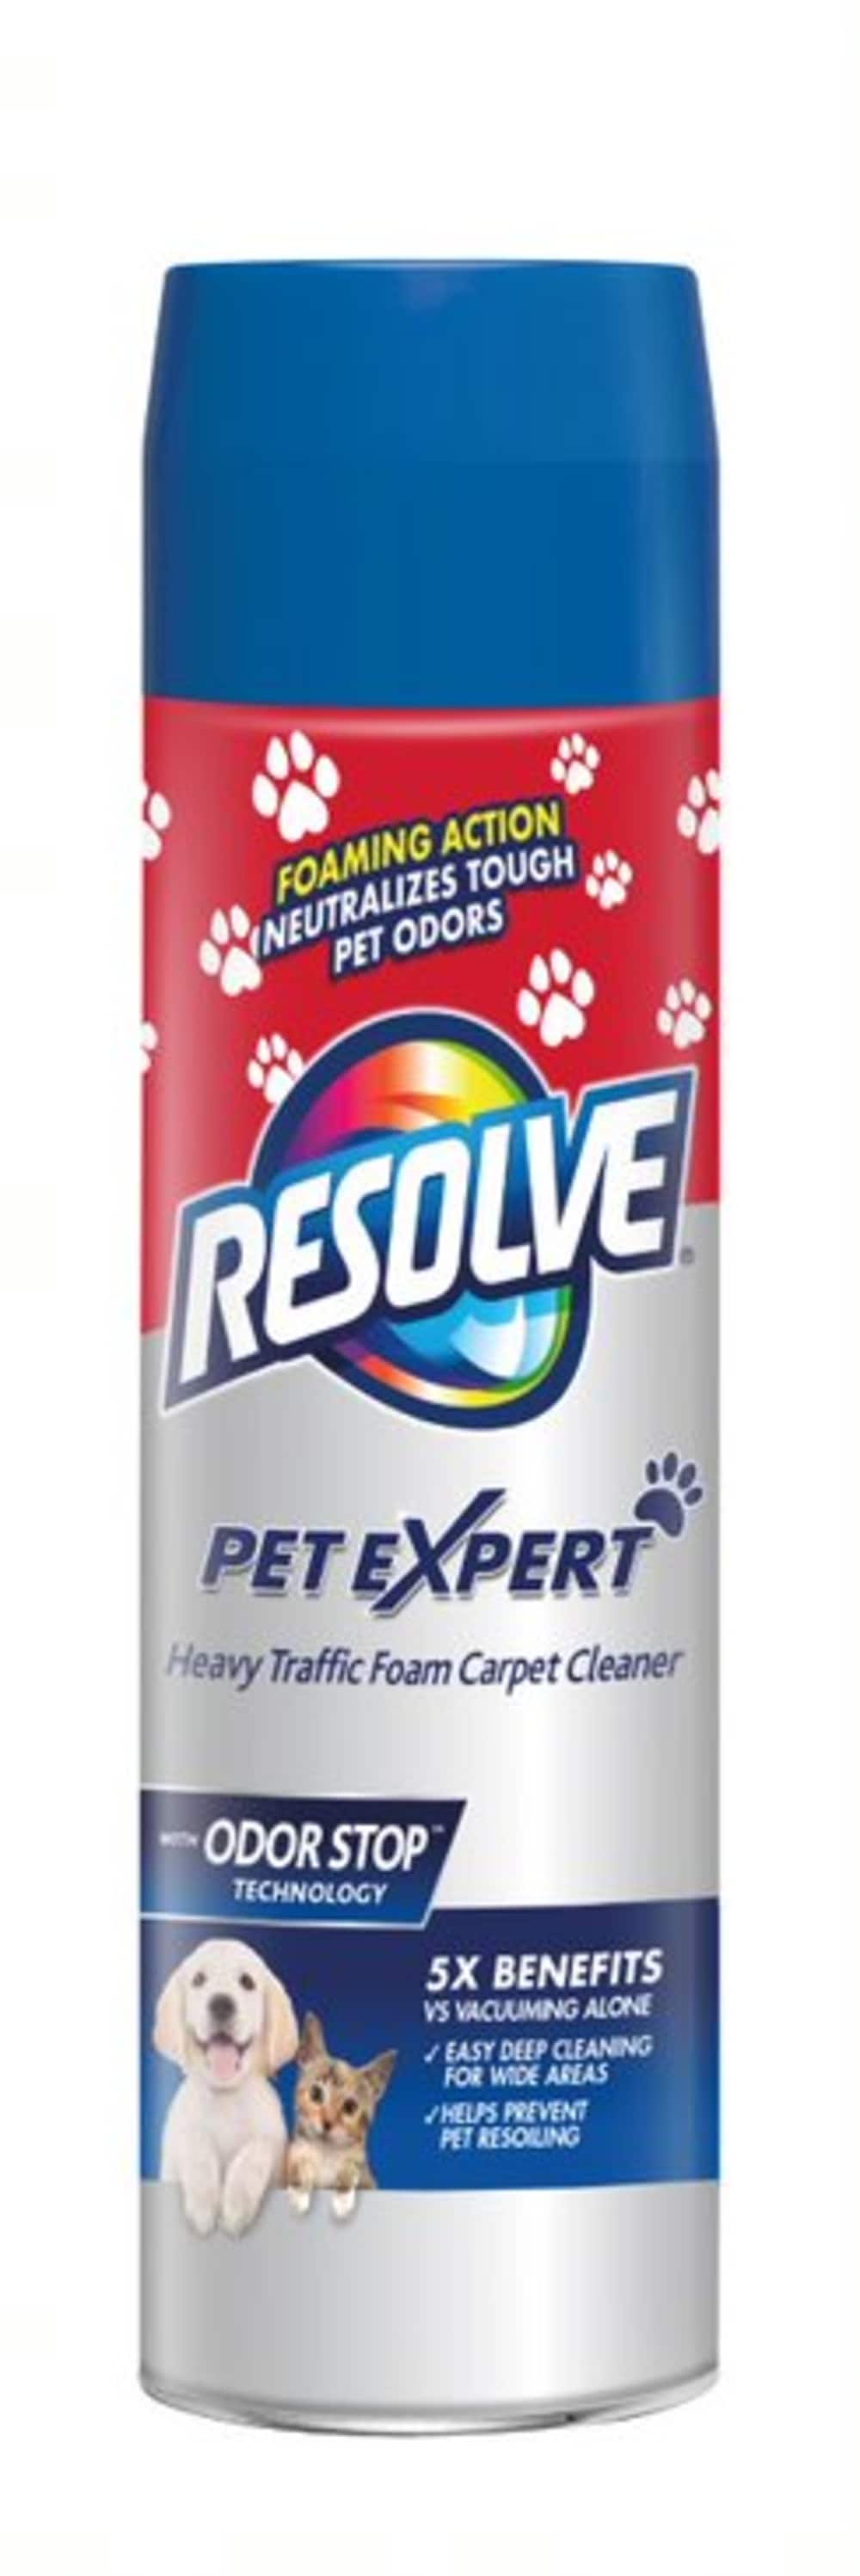  Resolve Pet Expert High Traffic, Carpet Foam, 22 oz (Pack of  12) : Health & Household